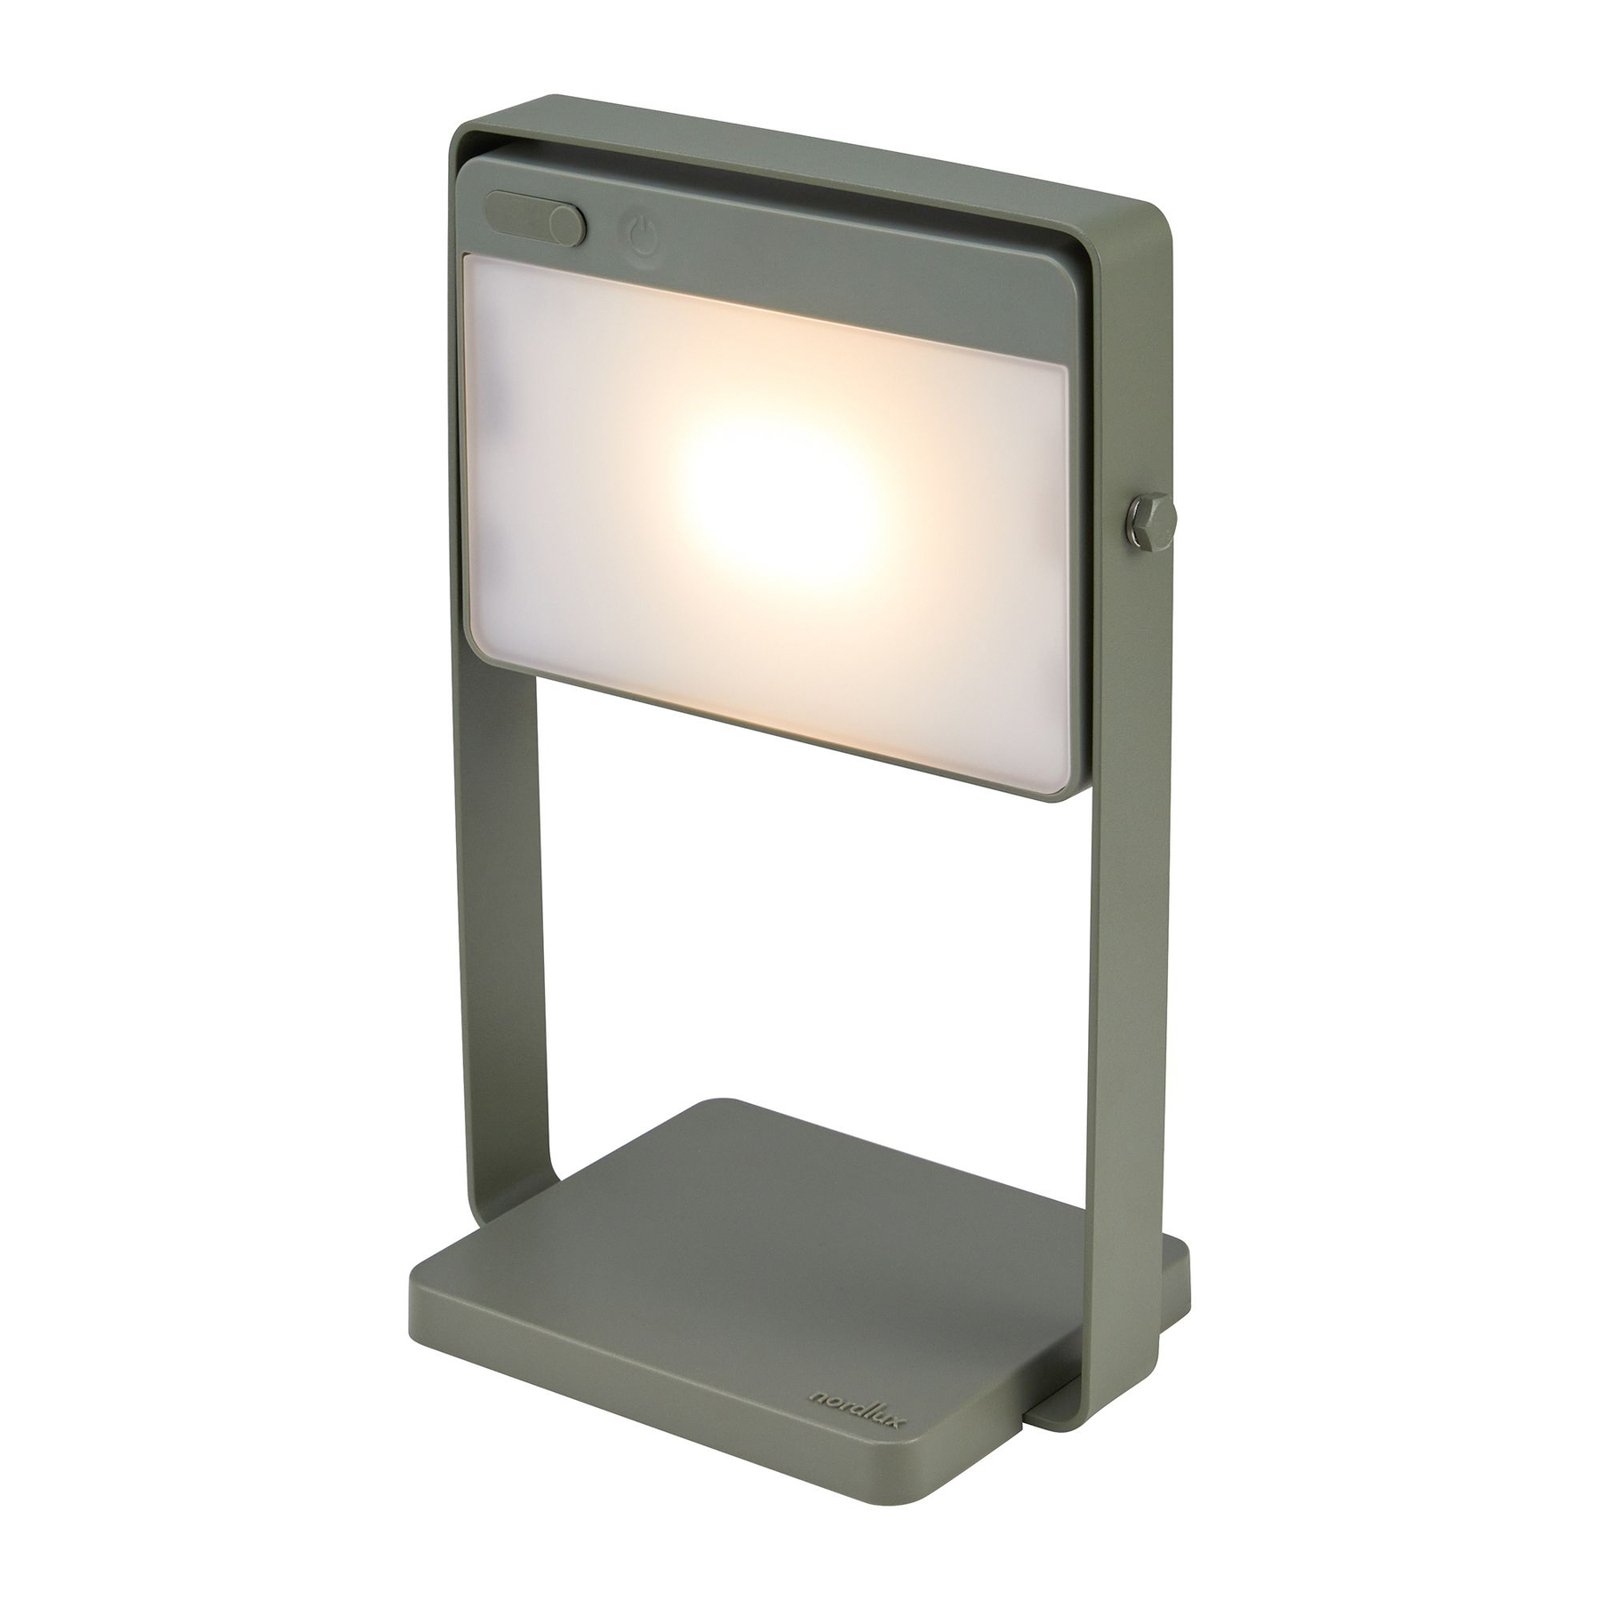 Saulio LED table lamp, olive green, IP44, aluminium, USB, rechargeable